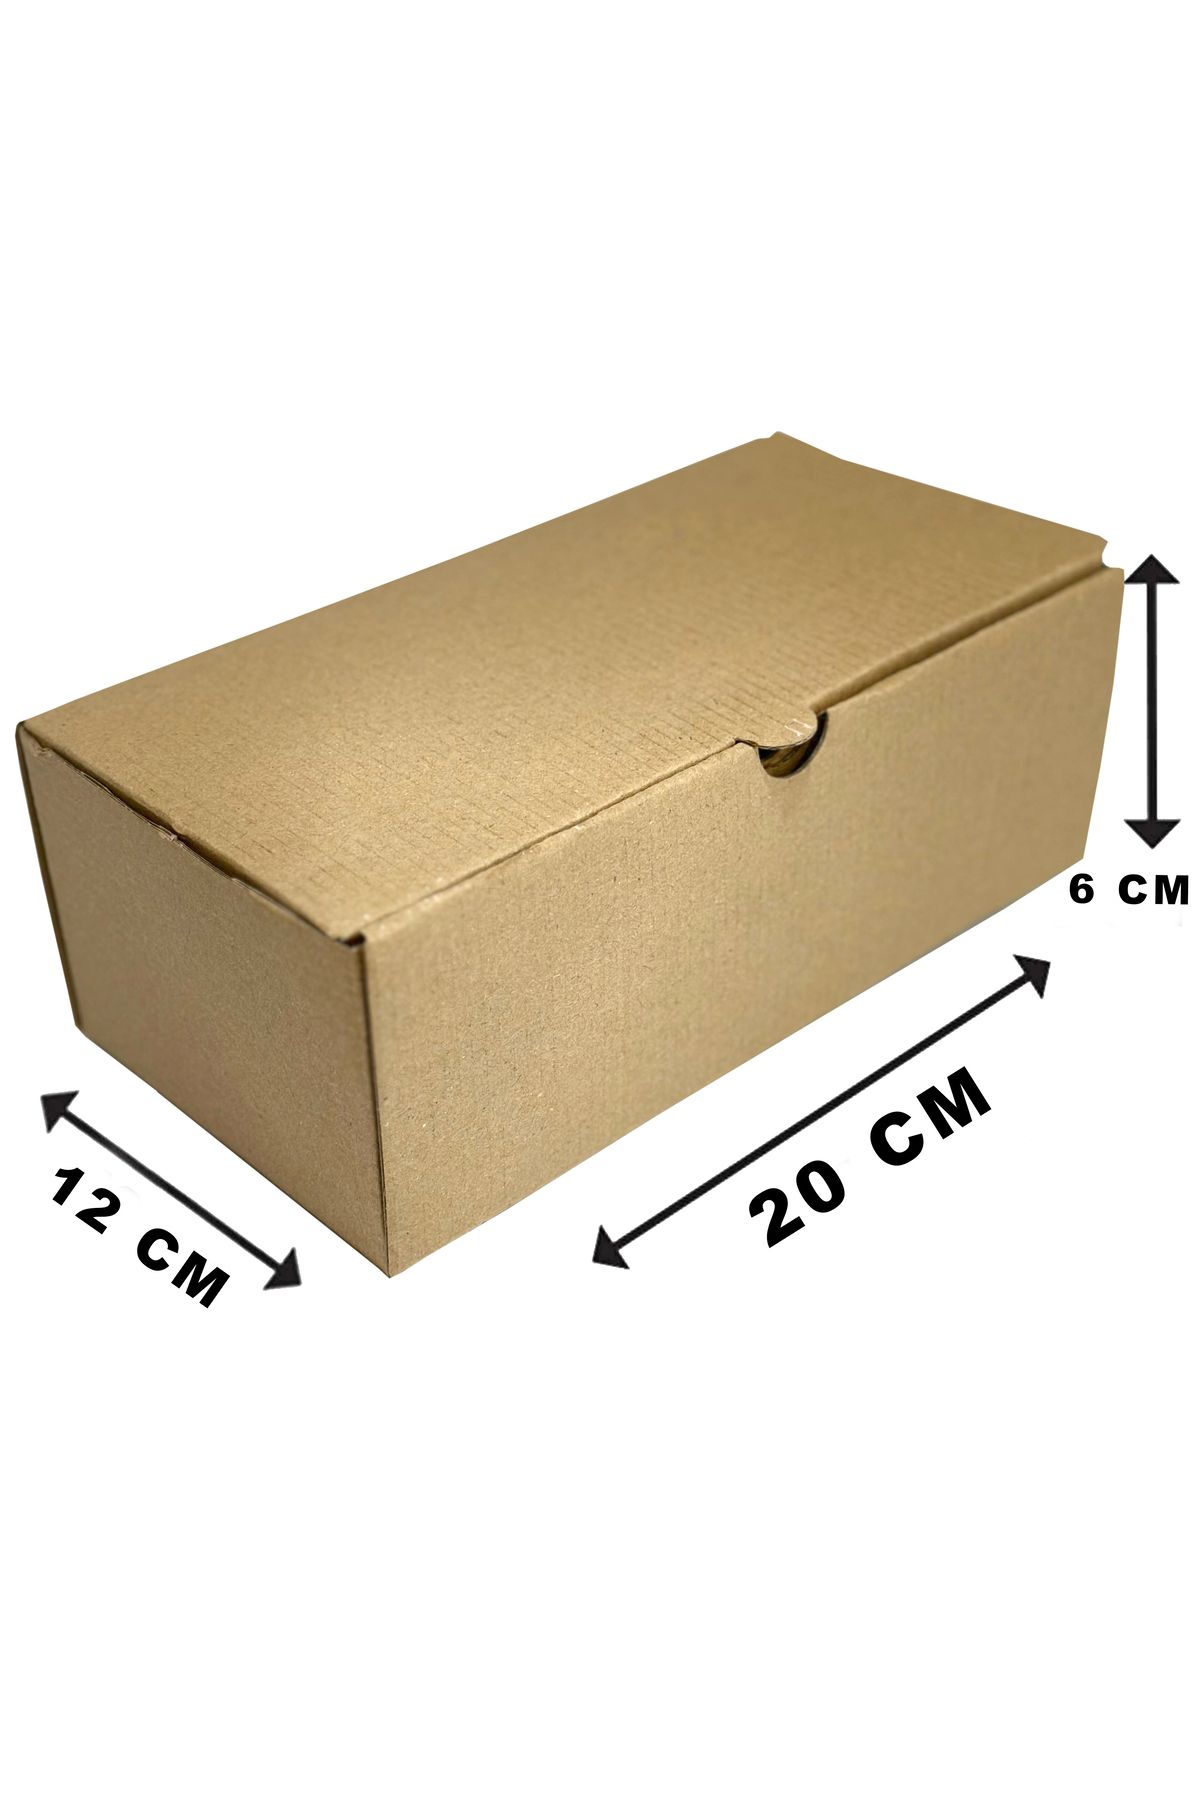 Mondi Paketleme Kargo Taşıma Kutusu 12x20x6 Cm 50 Adet